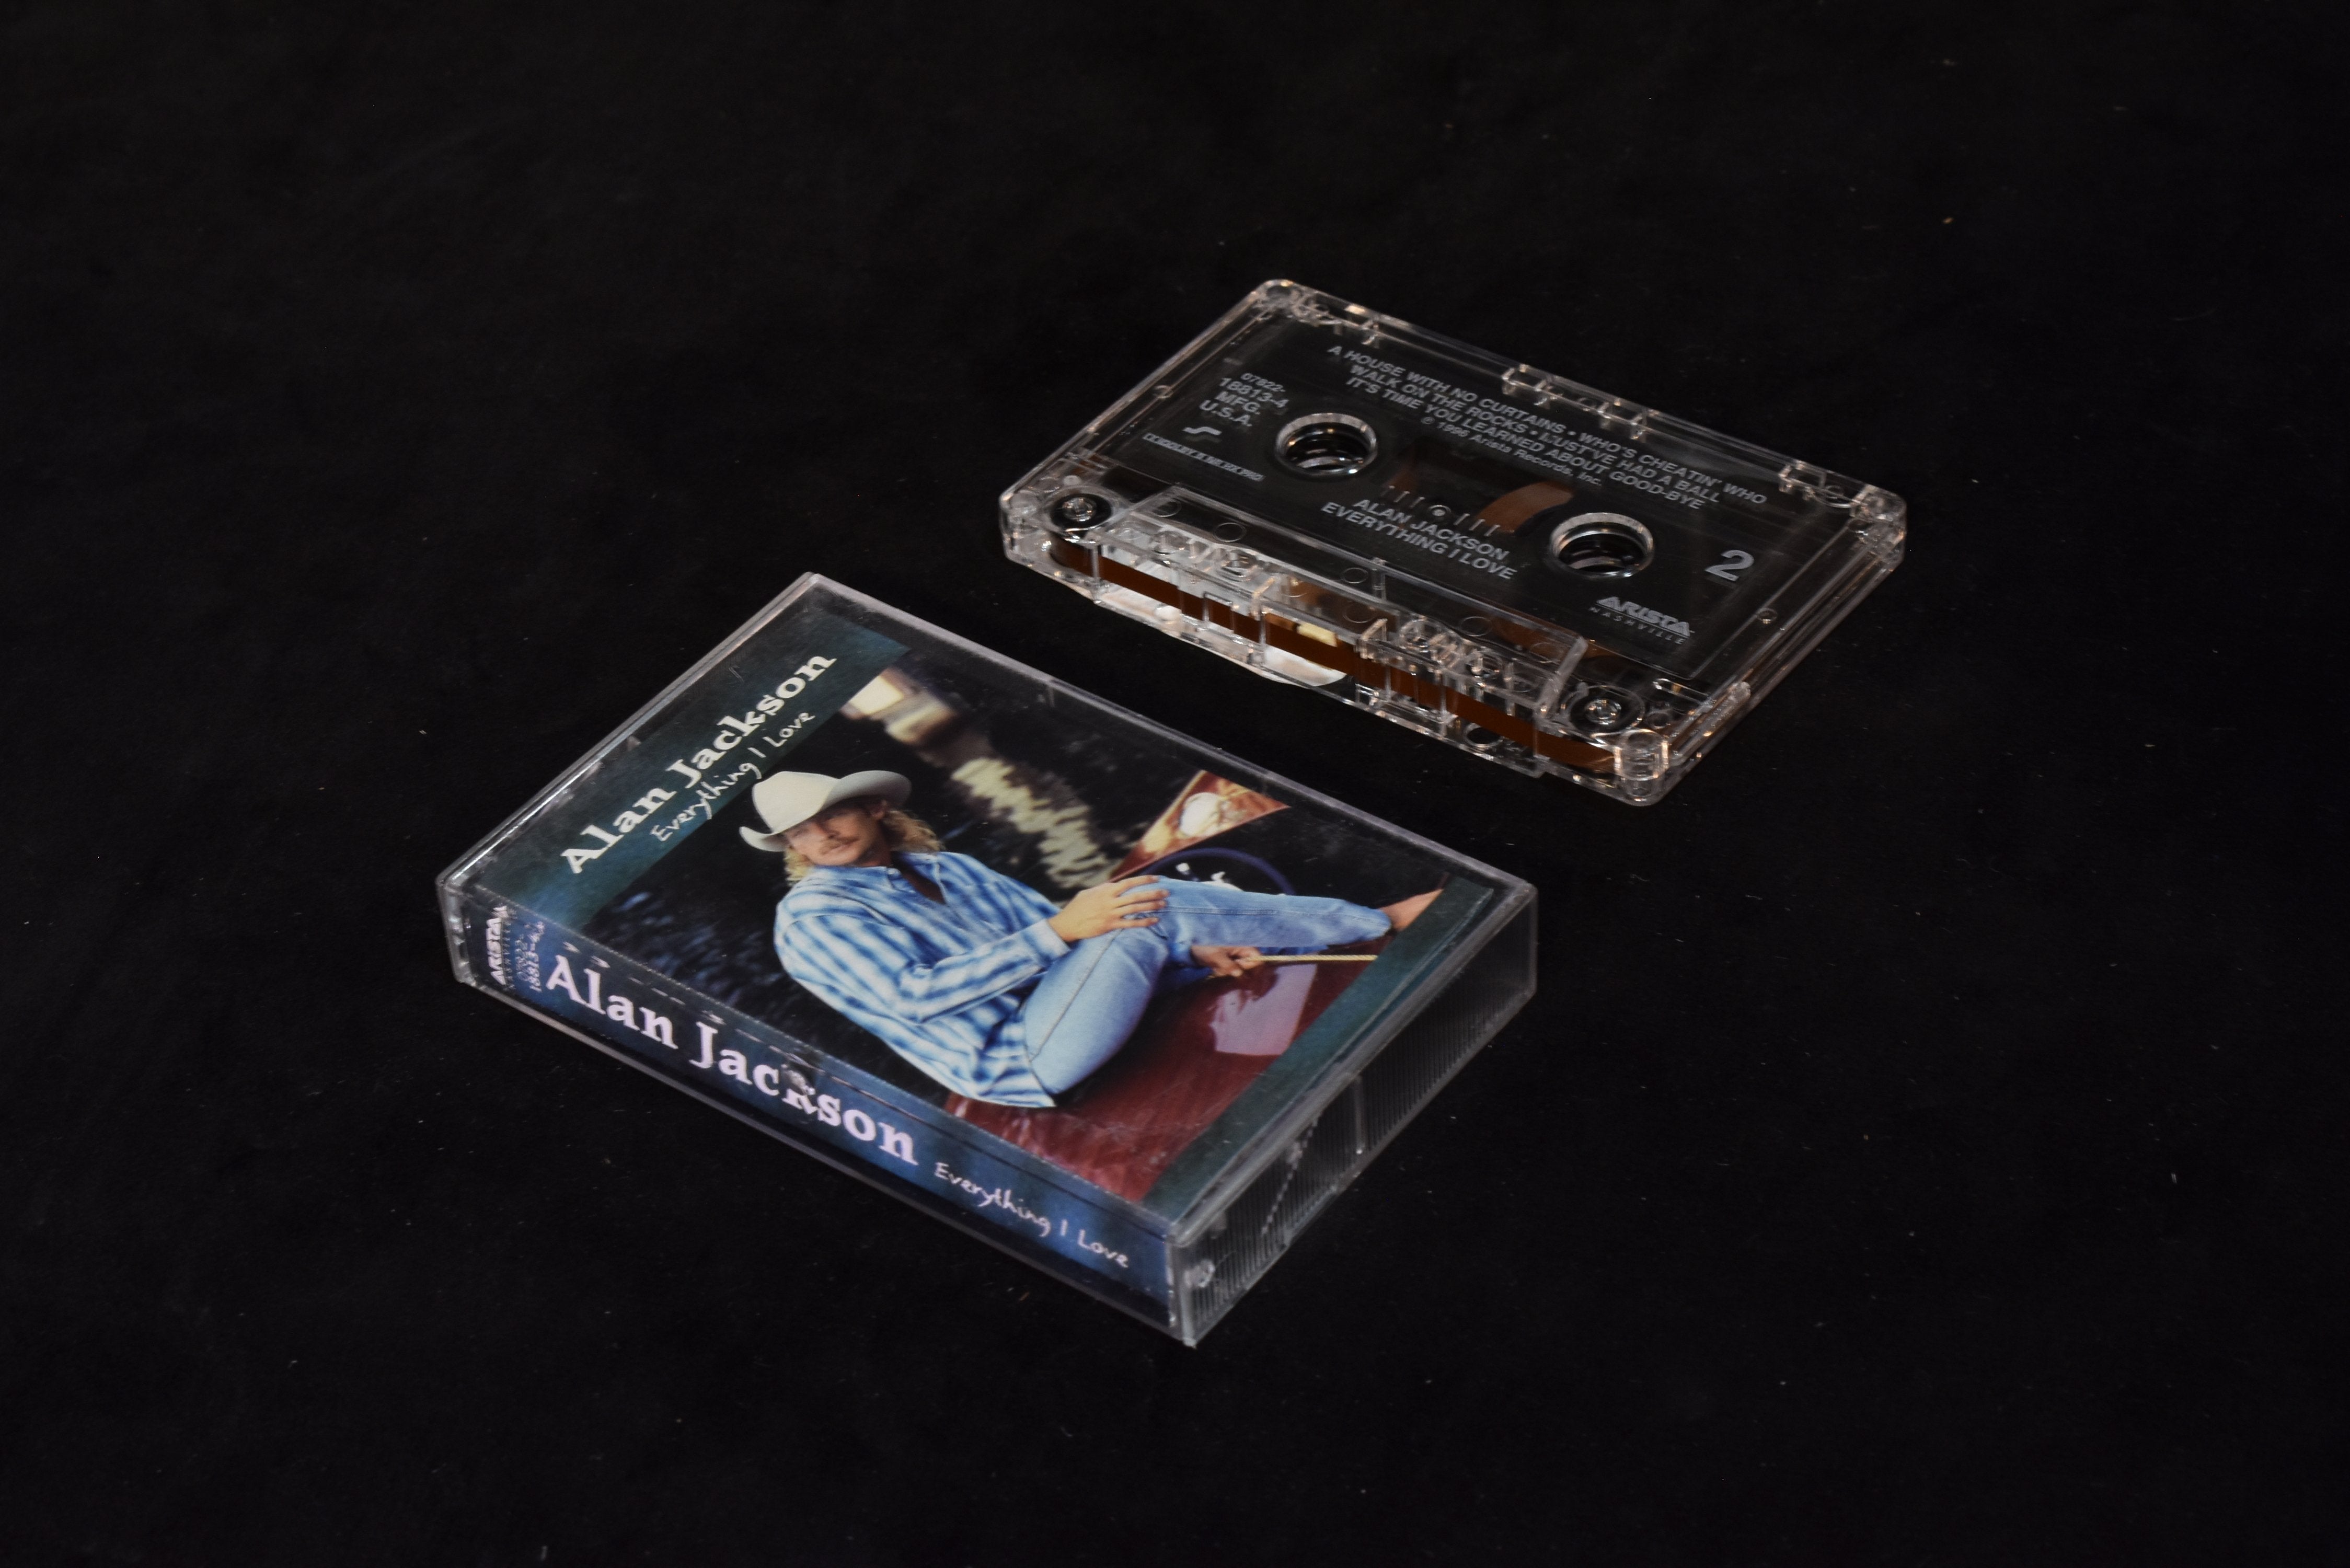 Alan Jackson everything I love cassette tape used